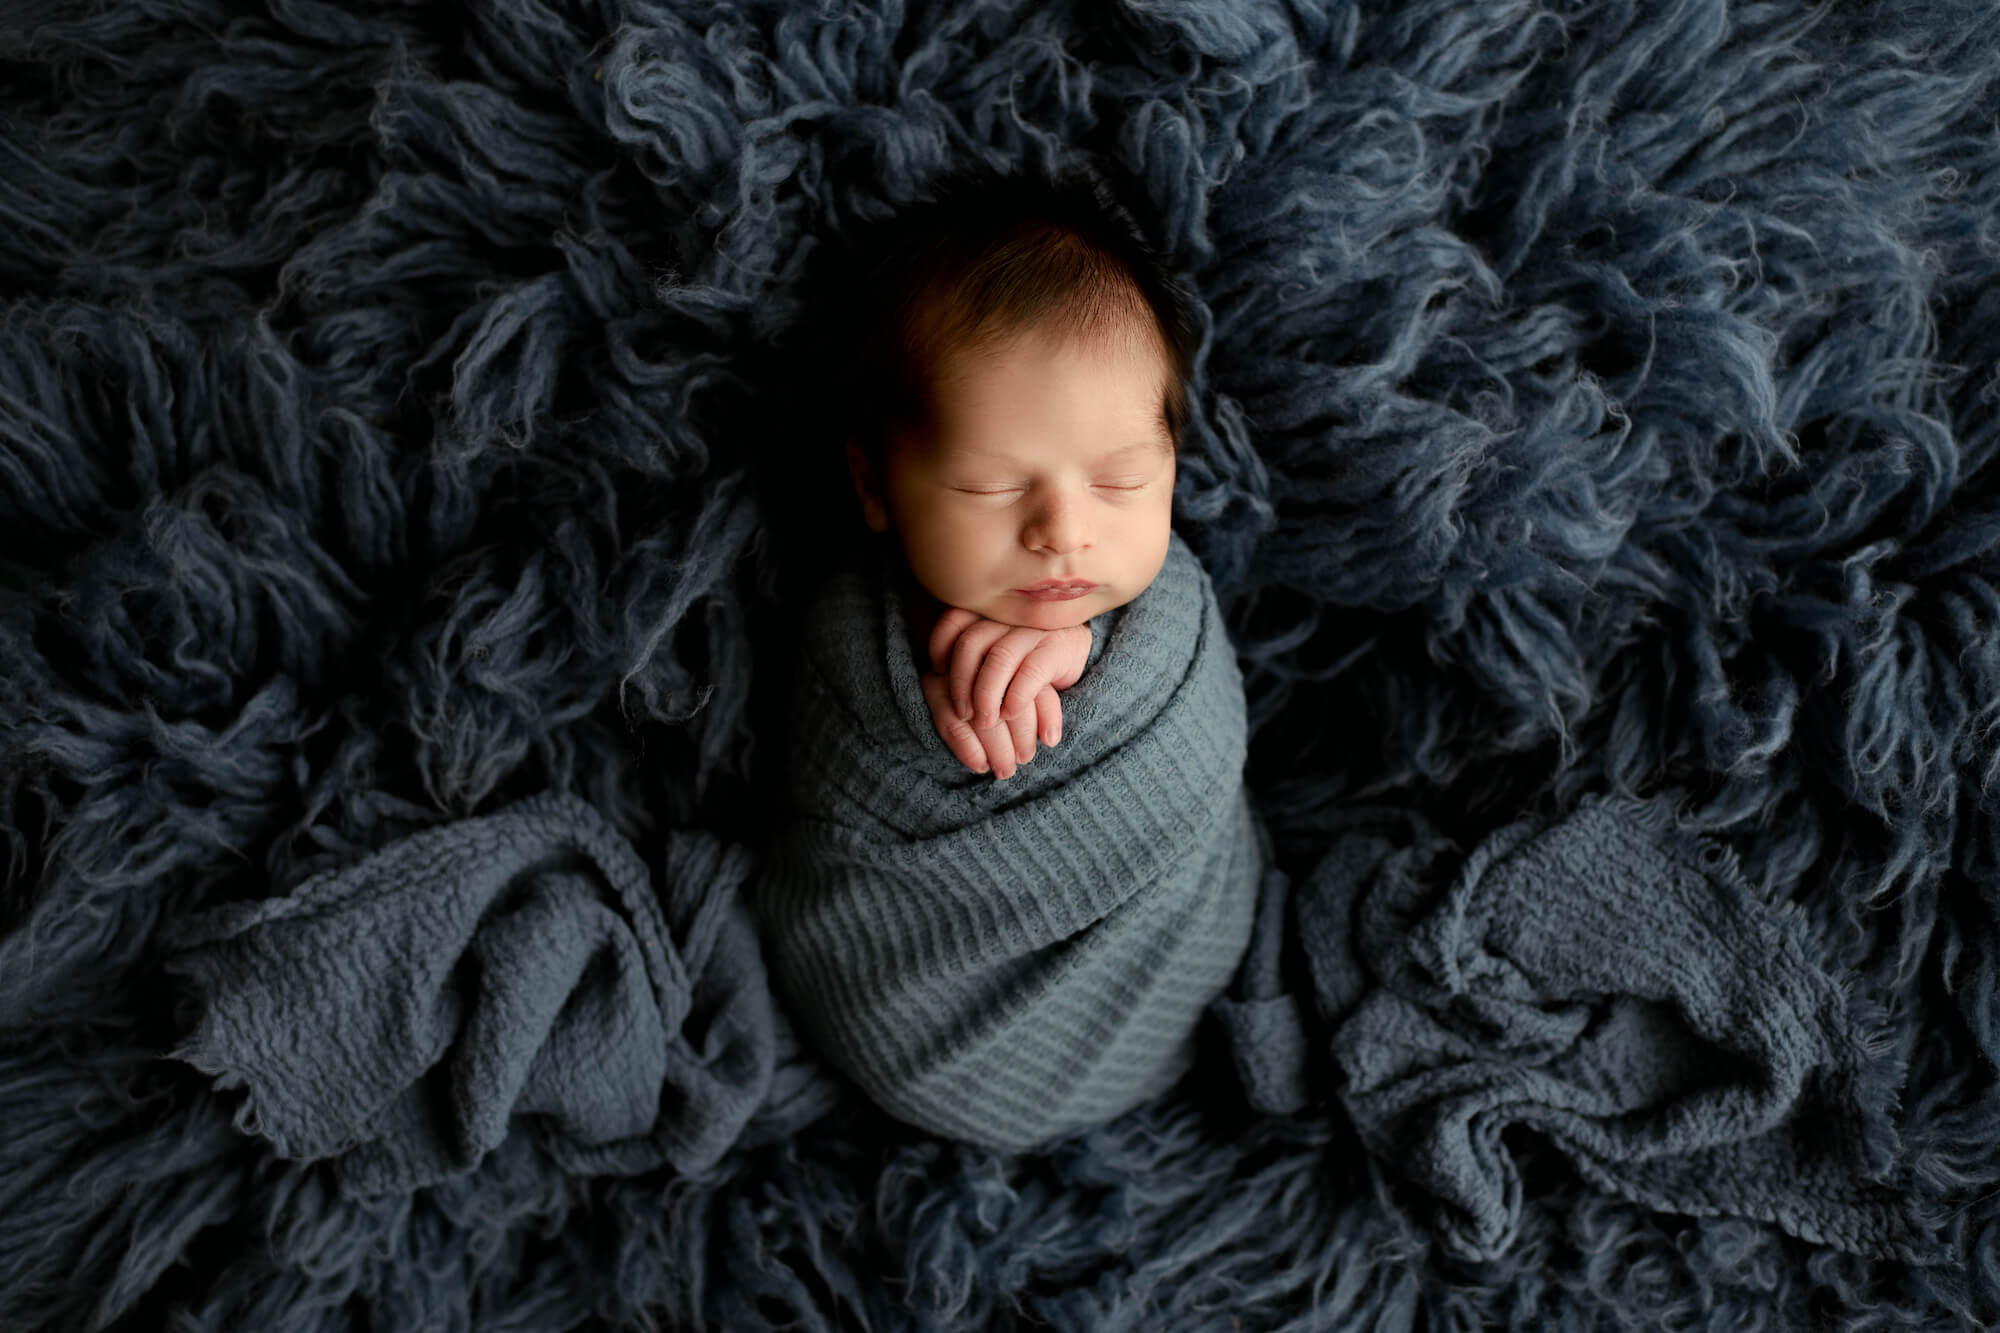 Canton GA Baby Photographer, newborn photography in canton ga, newborn photography atlanta